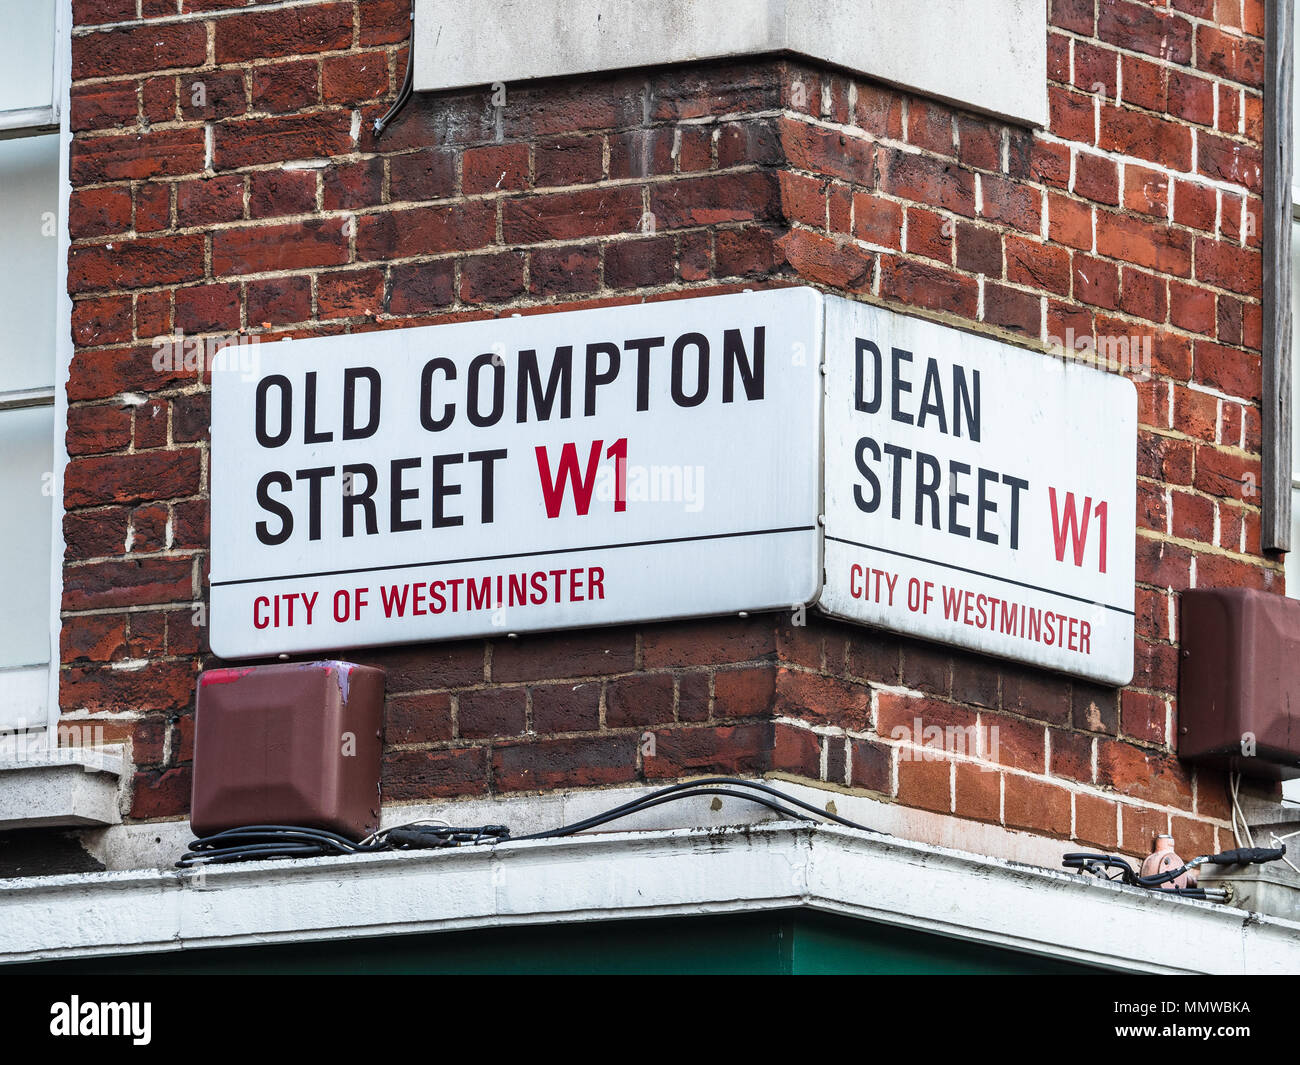 Soho Street Signs Series - Old Compton Street / Old Compton St & Dean Street / Dean St - London's Soho district Street Signs Stock Photo